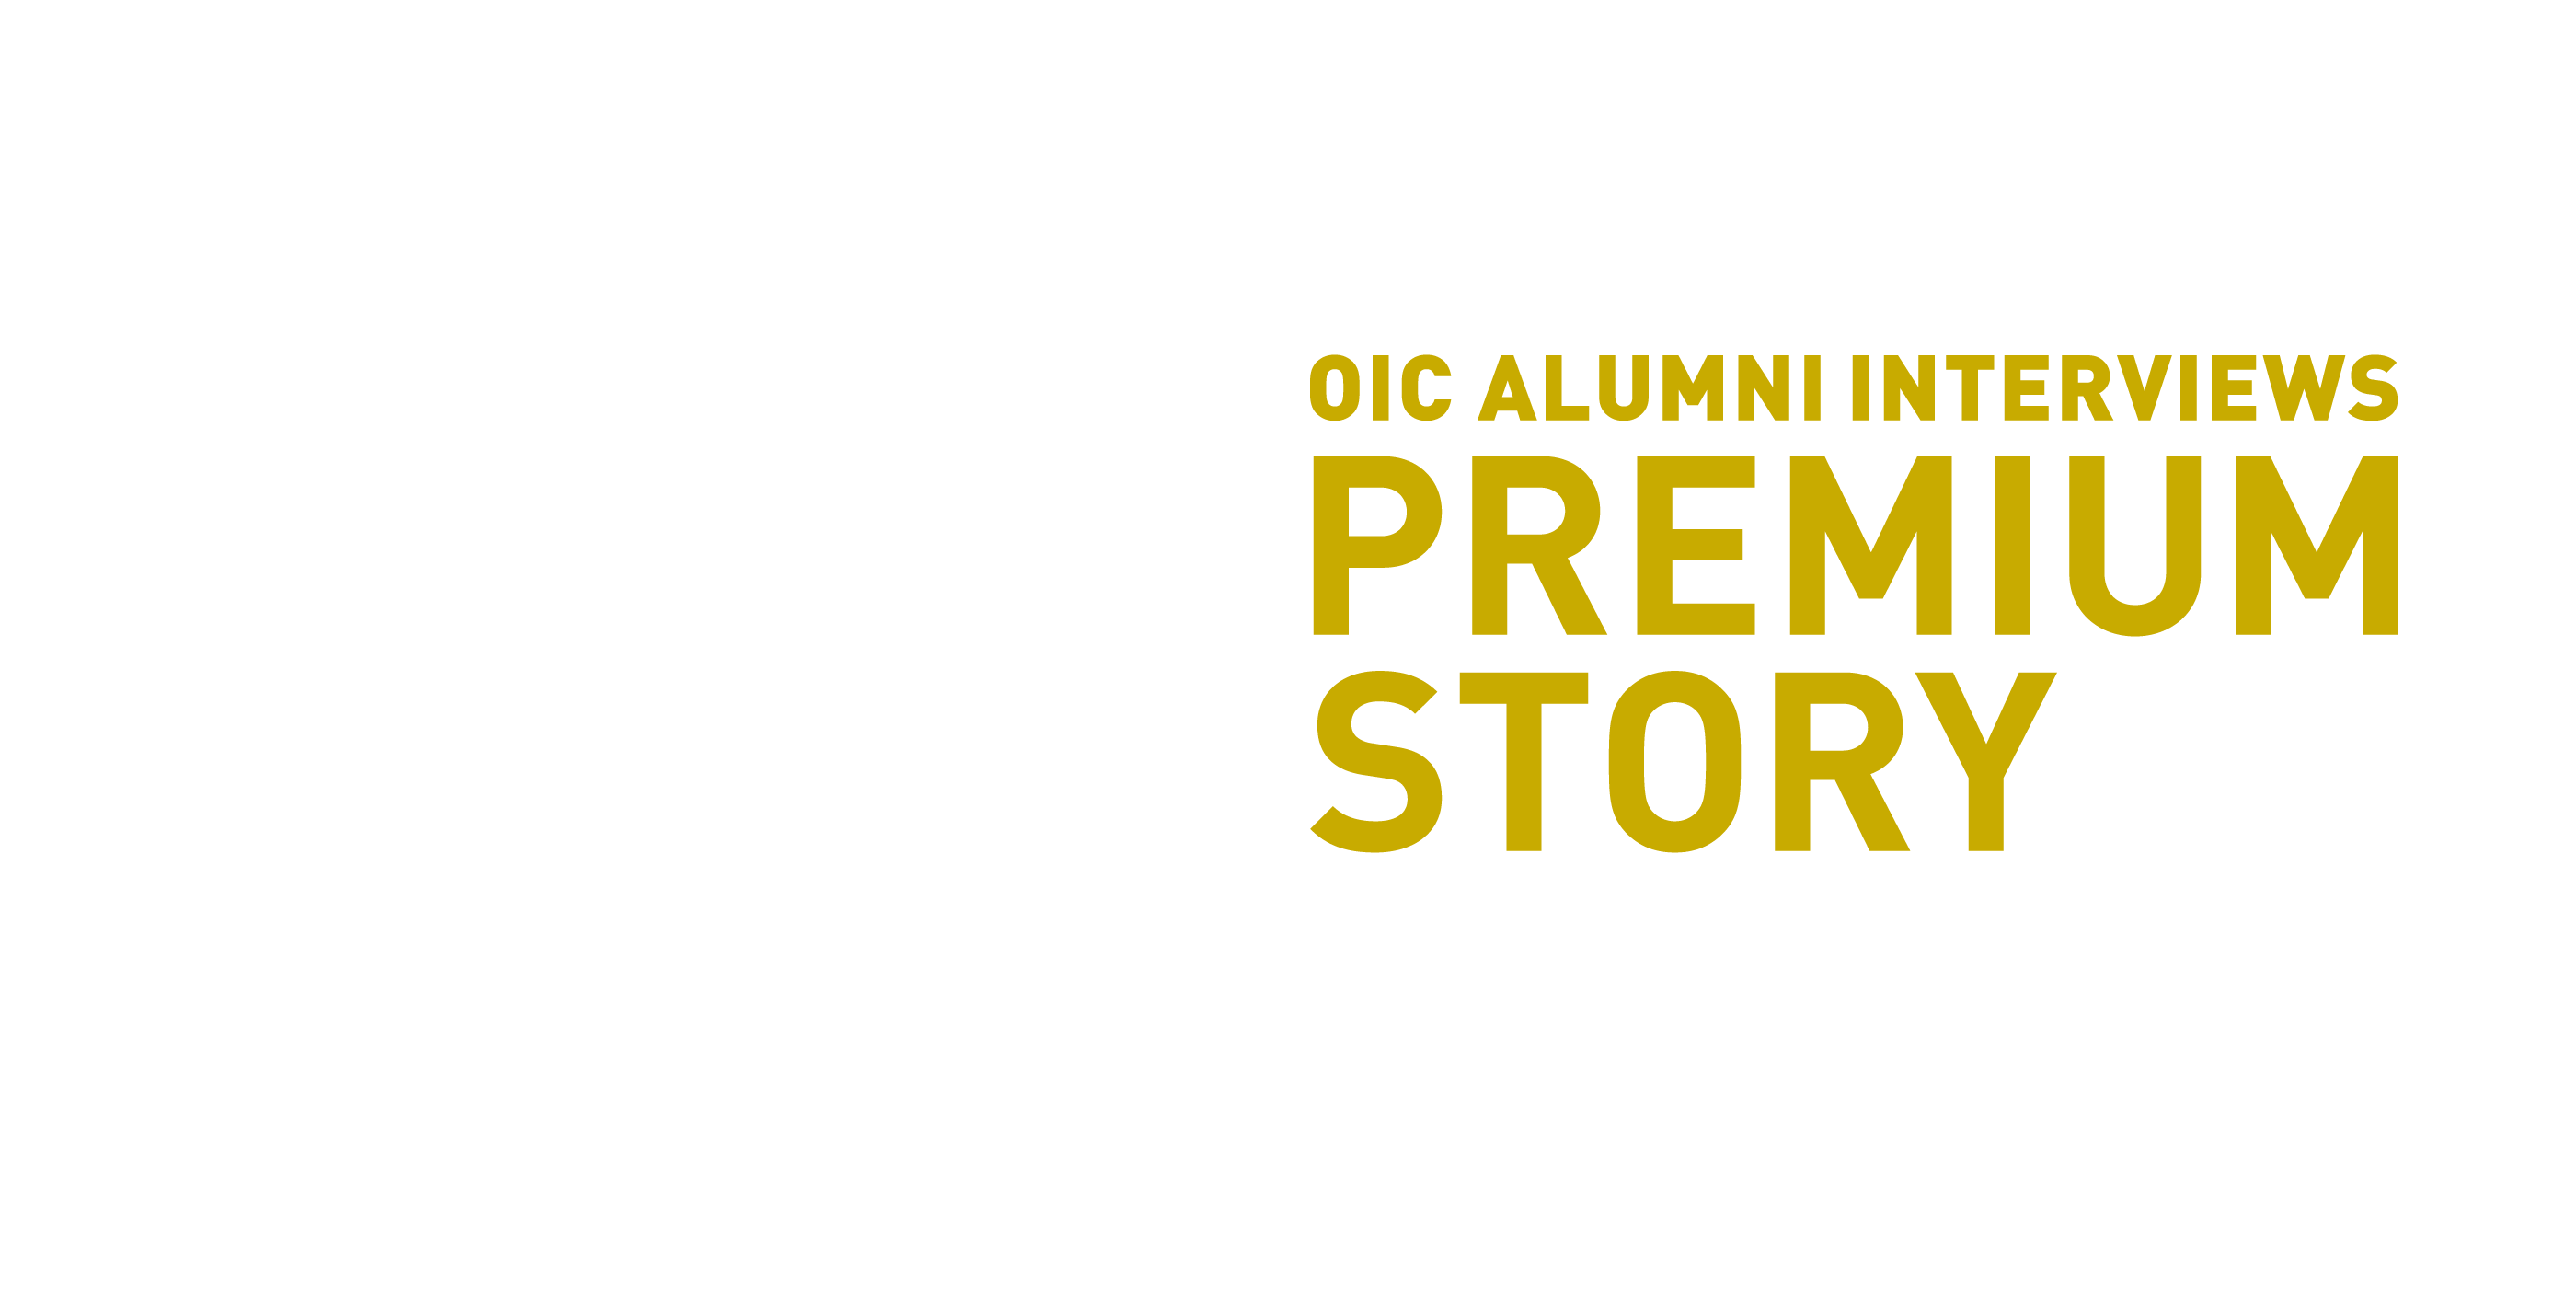 OIC ALUMNI INTERVIEWS PREMIUM STORY